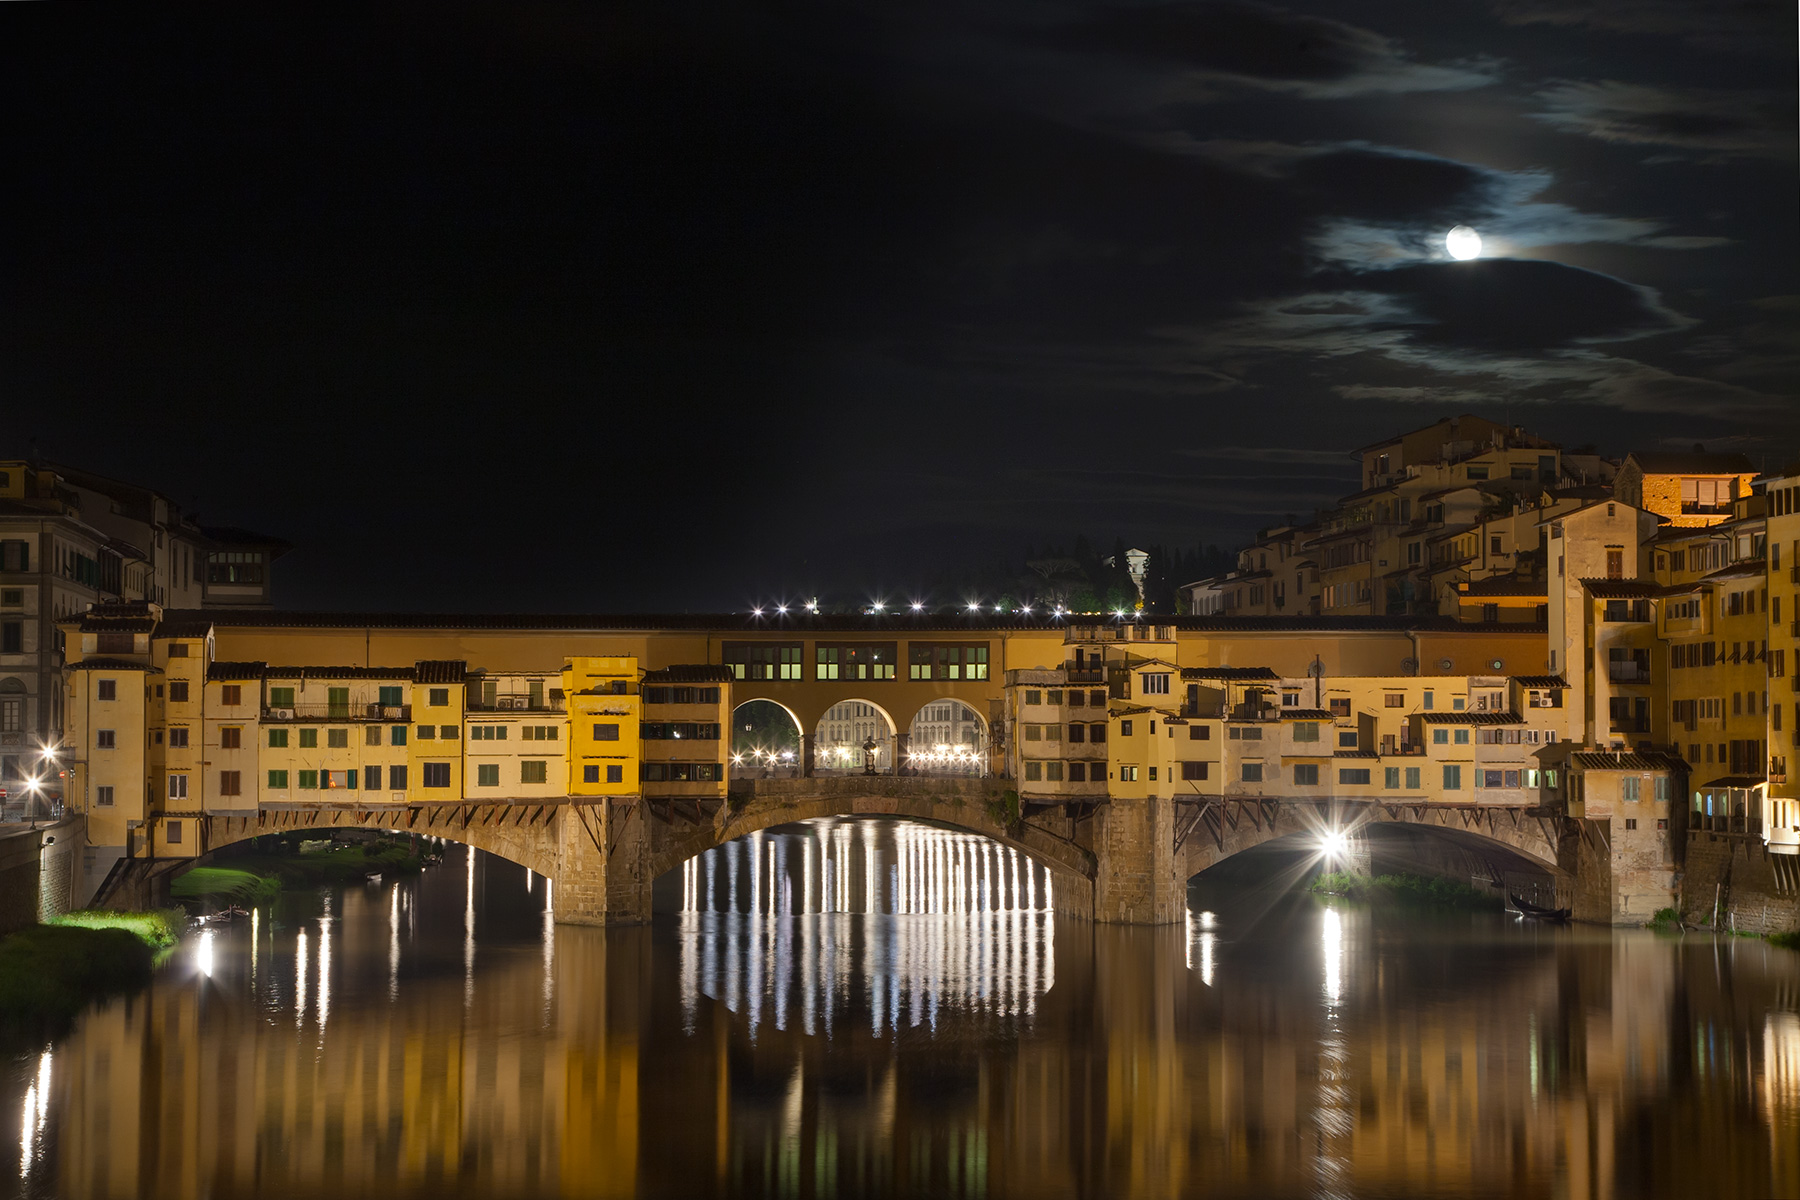 The moon on the bridge...